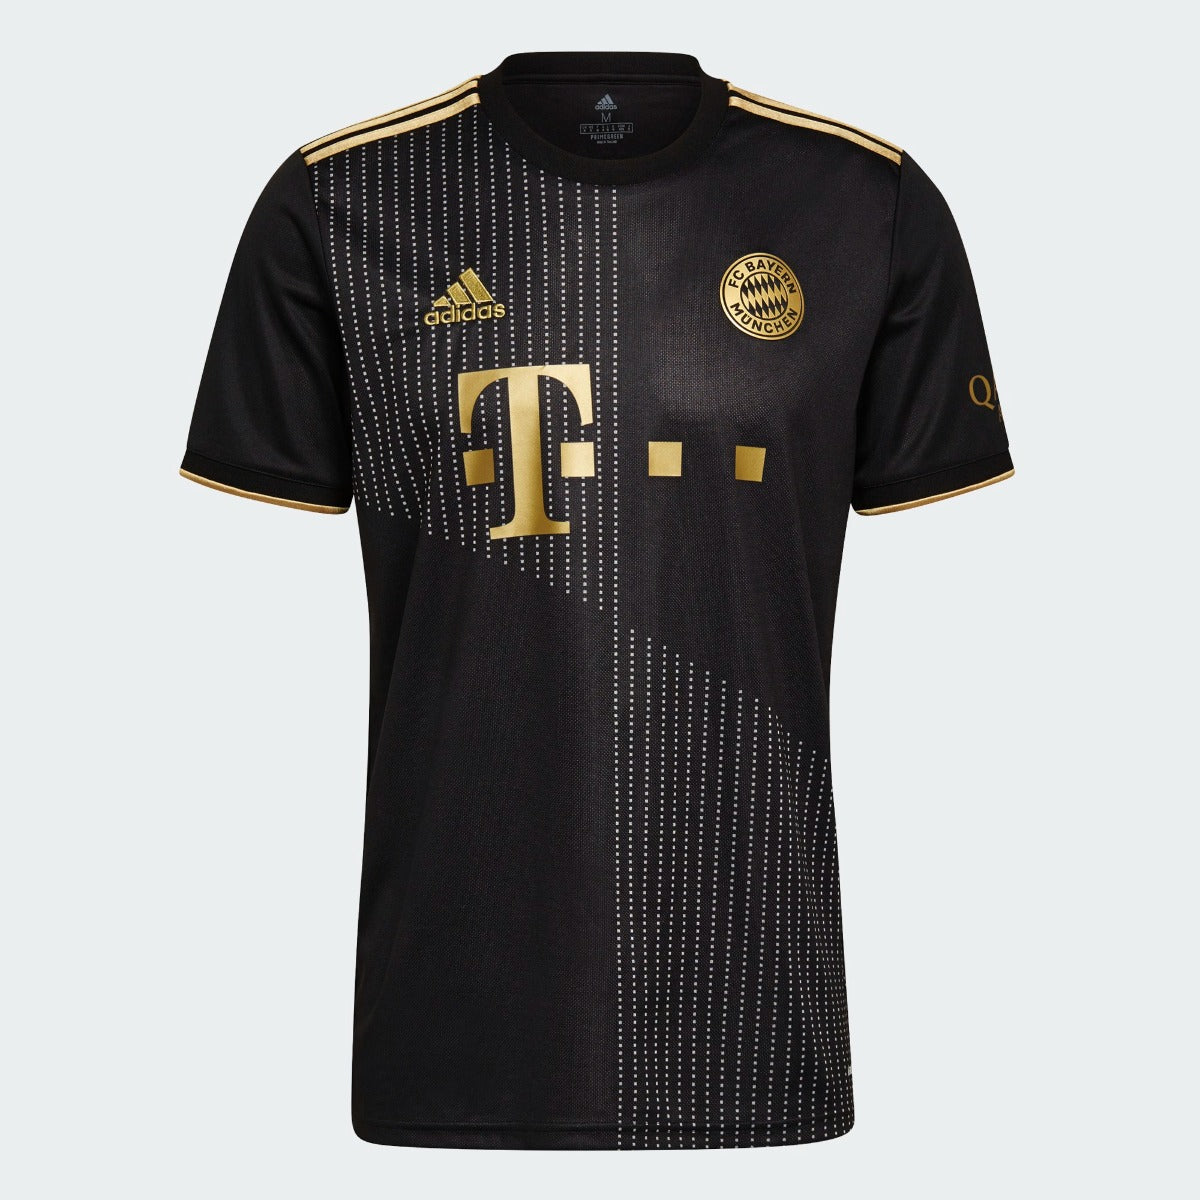 Adidas 2021-22 Bayern Munchen Away Jersey - Black-Gold (Front)